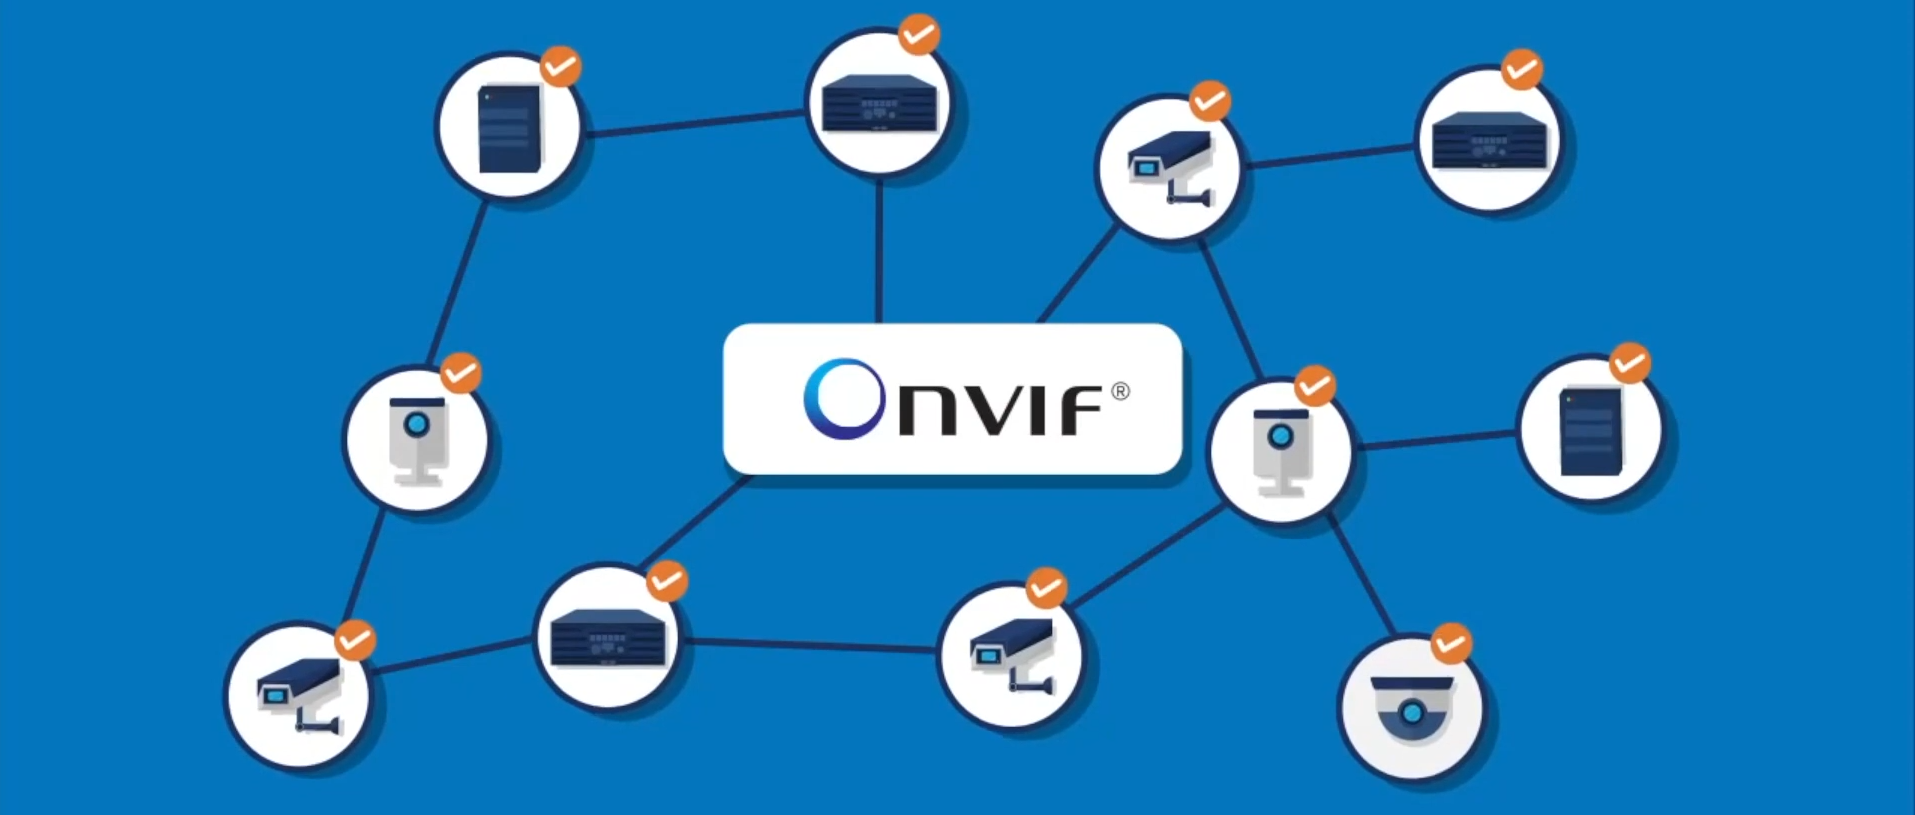 ONVIF در نظارت تصویری به عنوان یک استاندارد